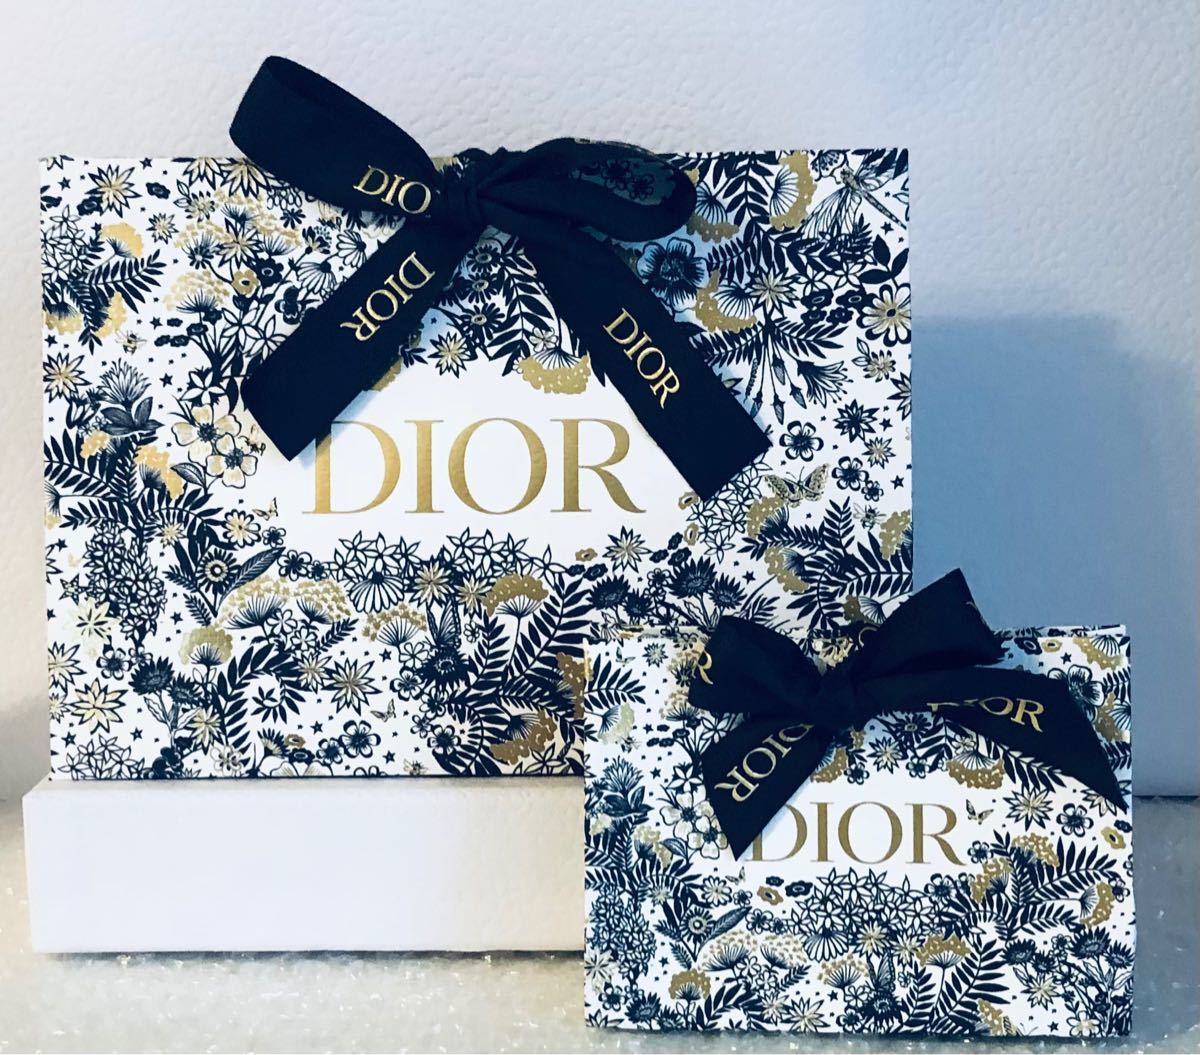 Dior ディオール クリスチャンディオール　 アディクトリップ マキシマイザー　020 チョコレート ブラウン リップ 限定